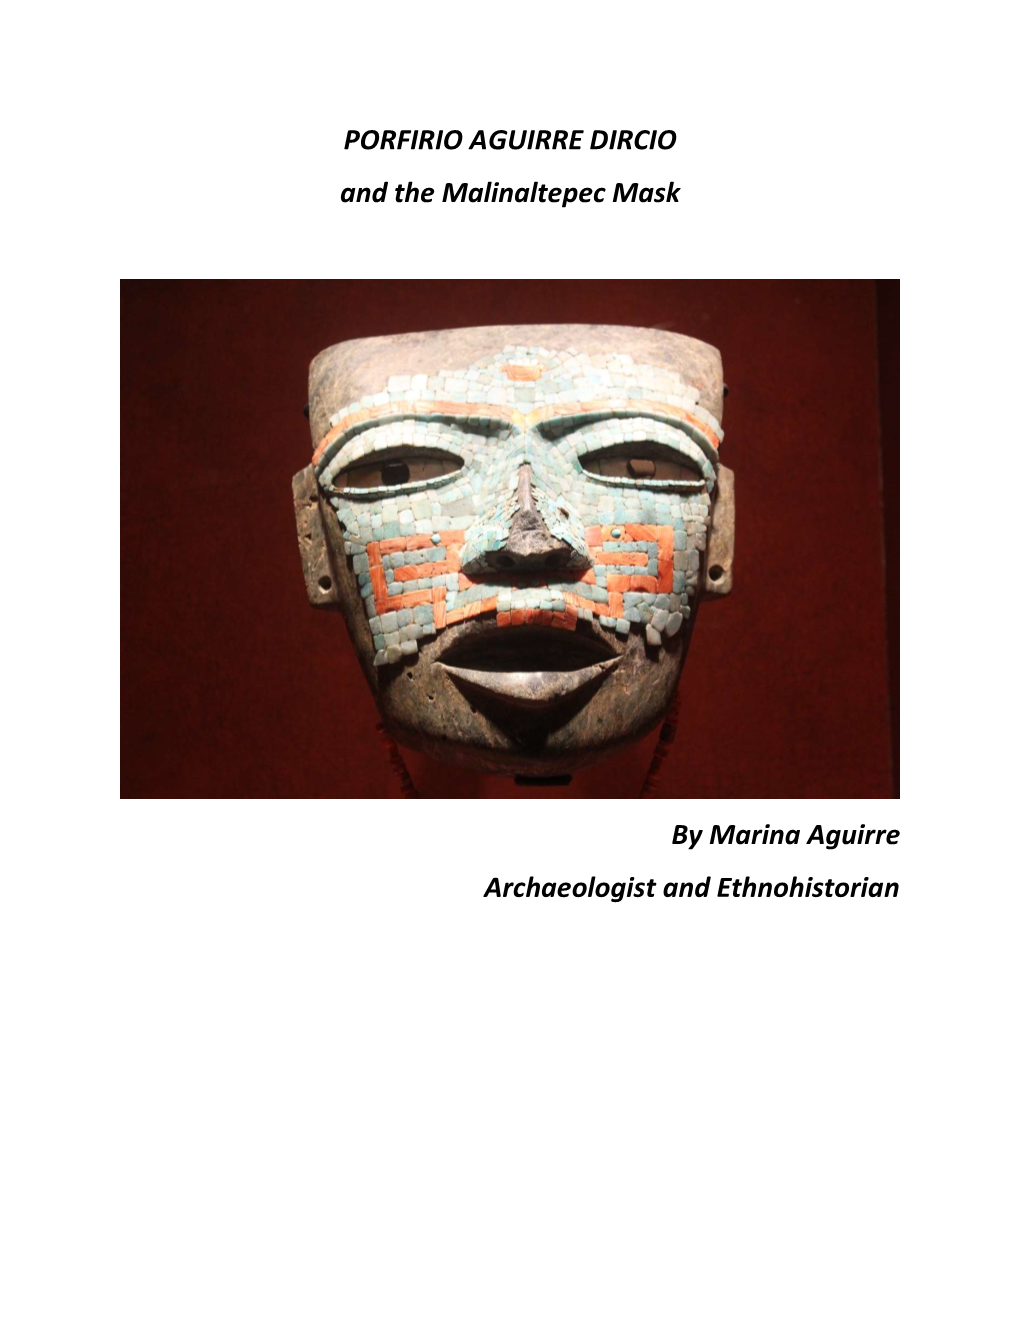 PORFIRIO AGUIRRE DIRCIO and the Malinaltepec Mask by Marina Aguirre Archaeologist and Ethnohistorian